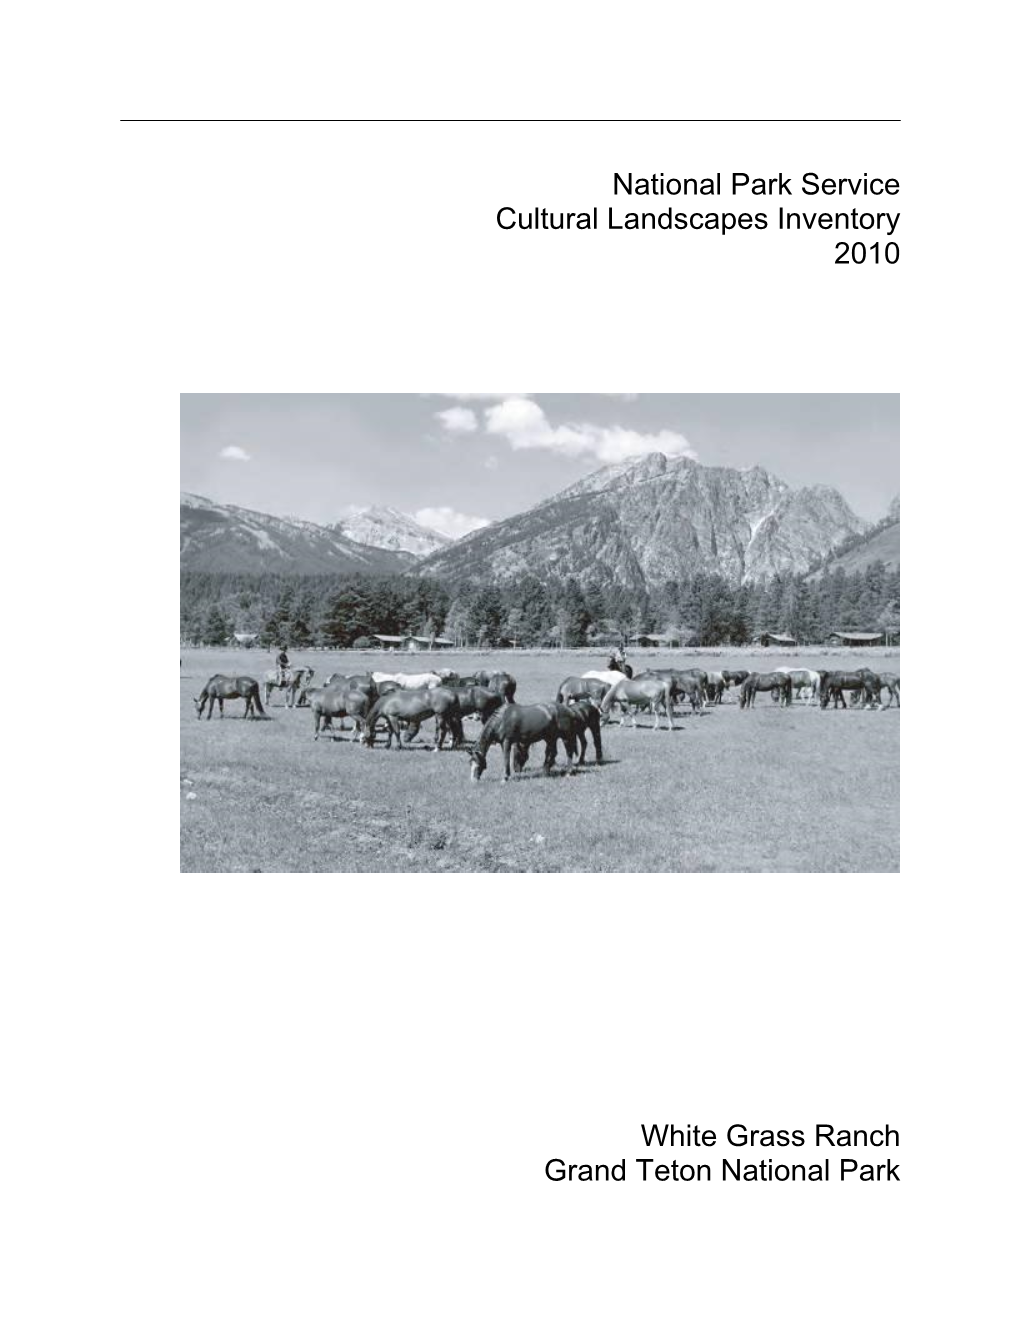 National Park Service Cultural Landscapes Inventory 2010 White